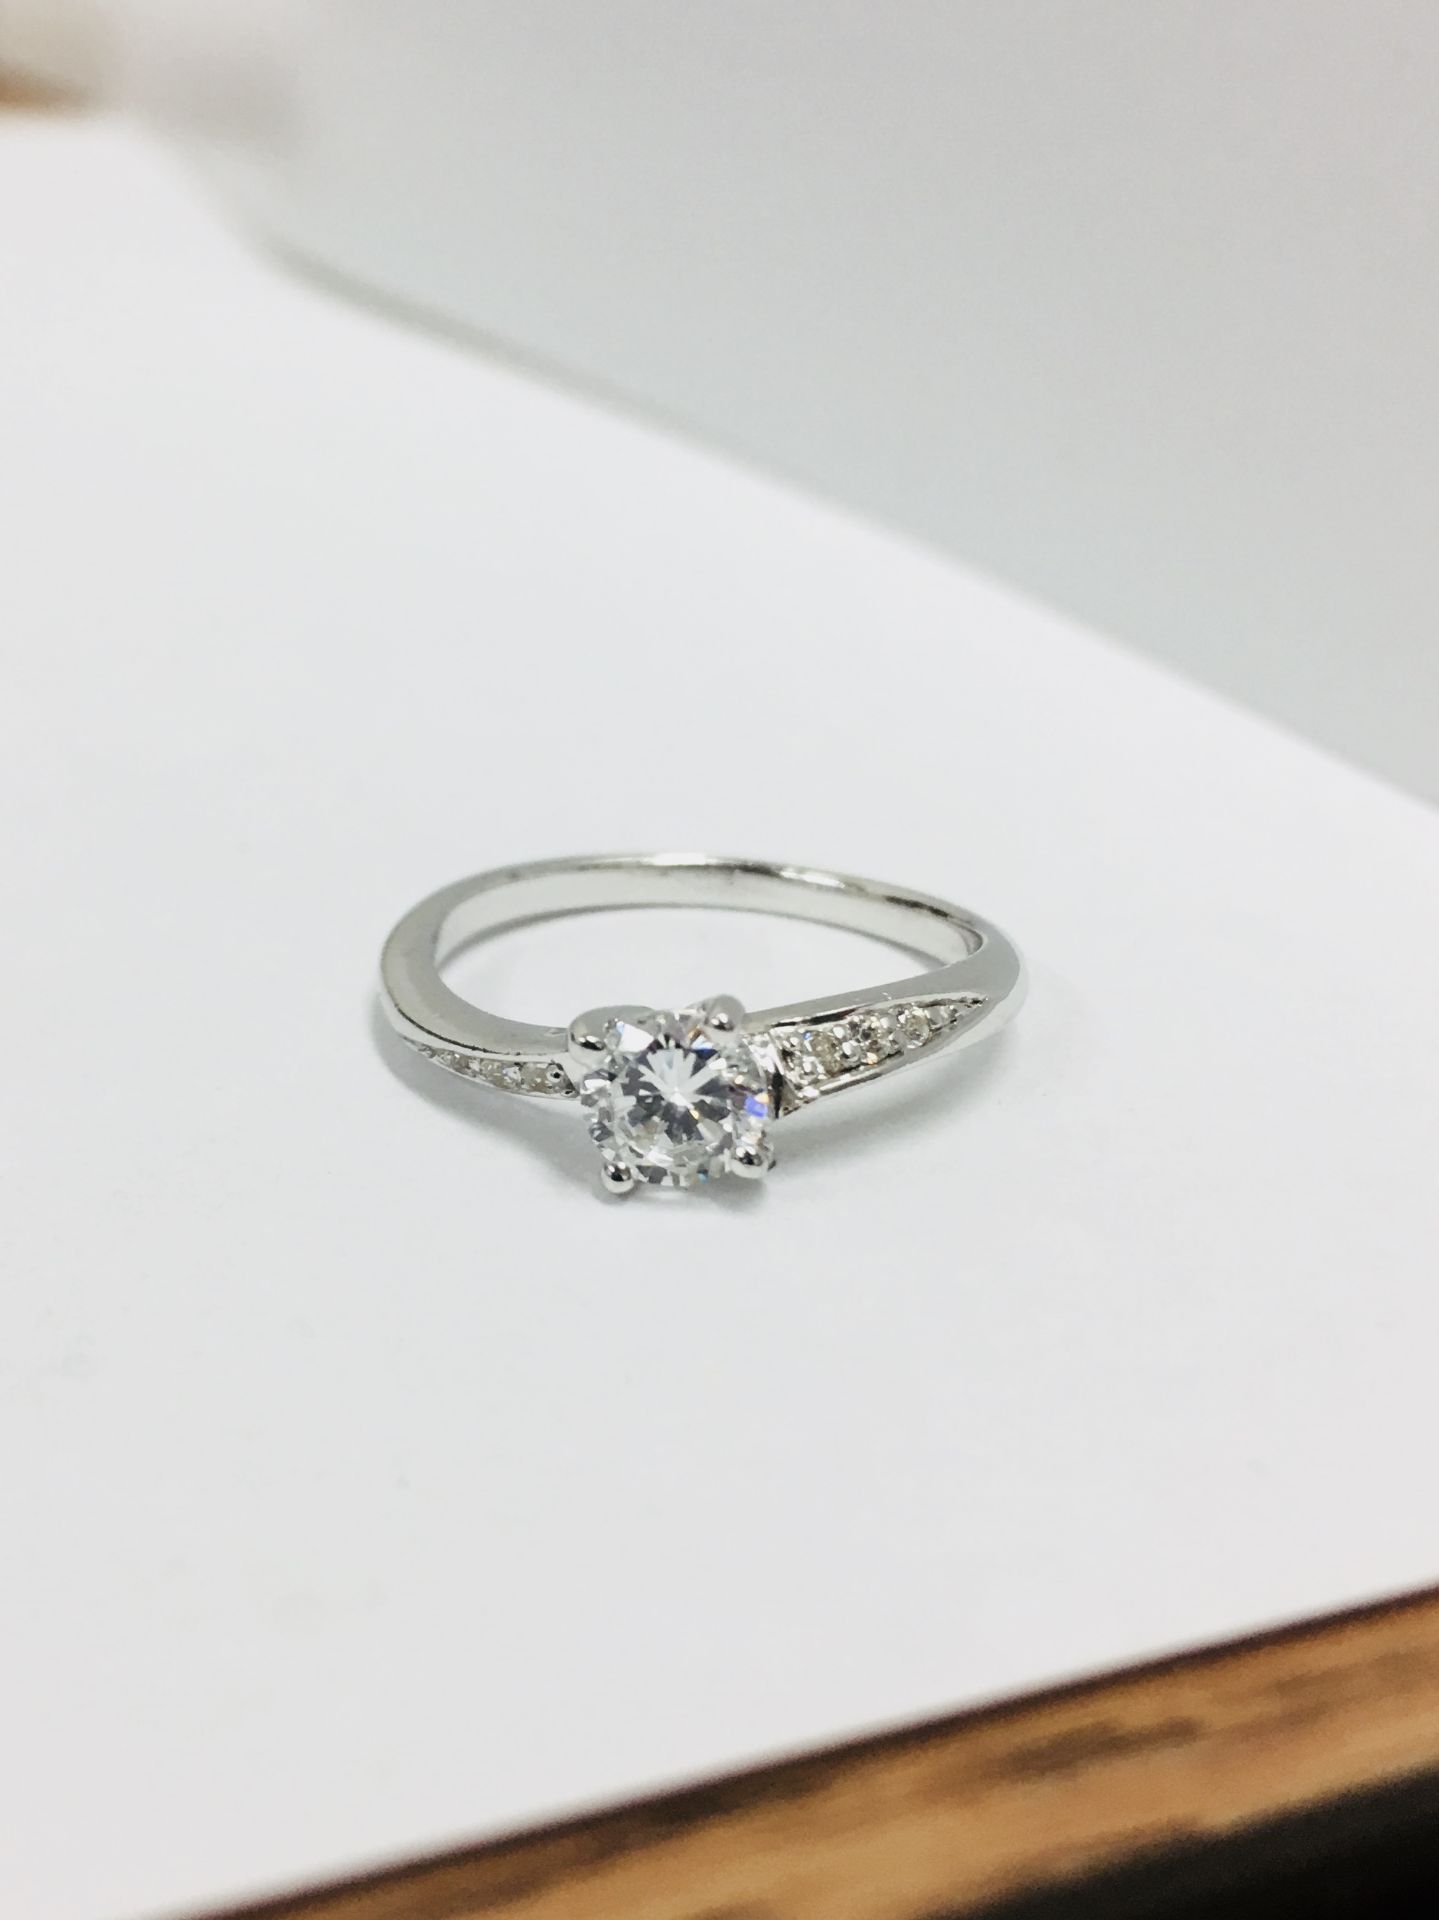 platinum damond solitaire ring,0.50ct brilliant cut diamond h colour vs clarity(clarity enhanced),